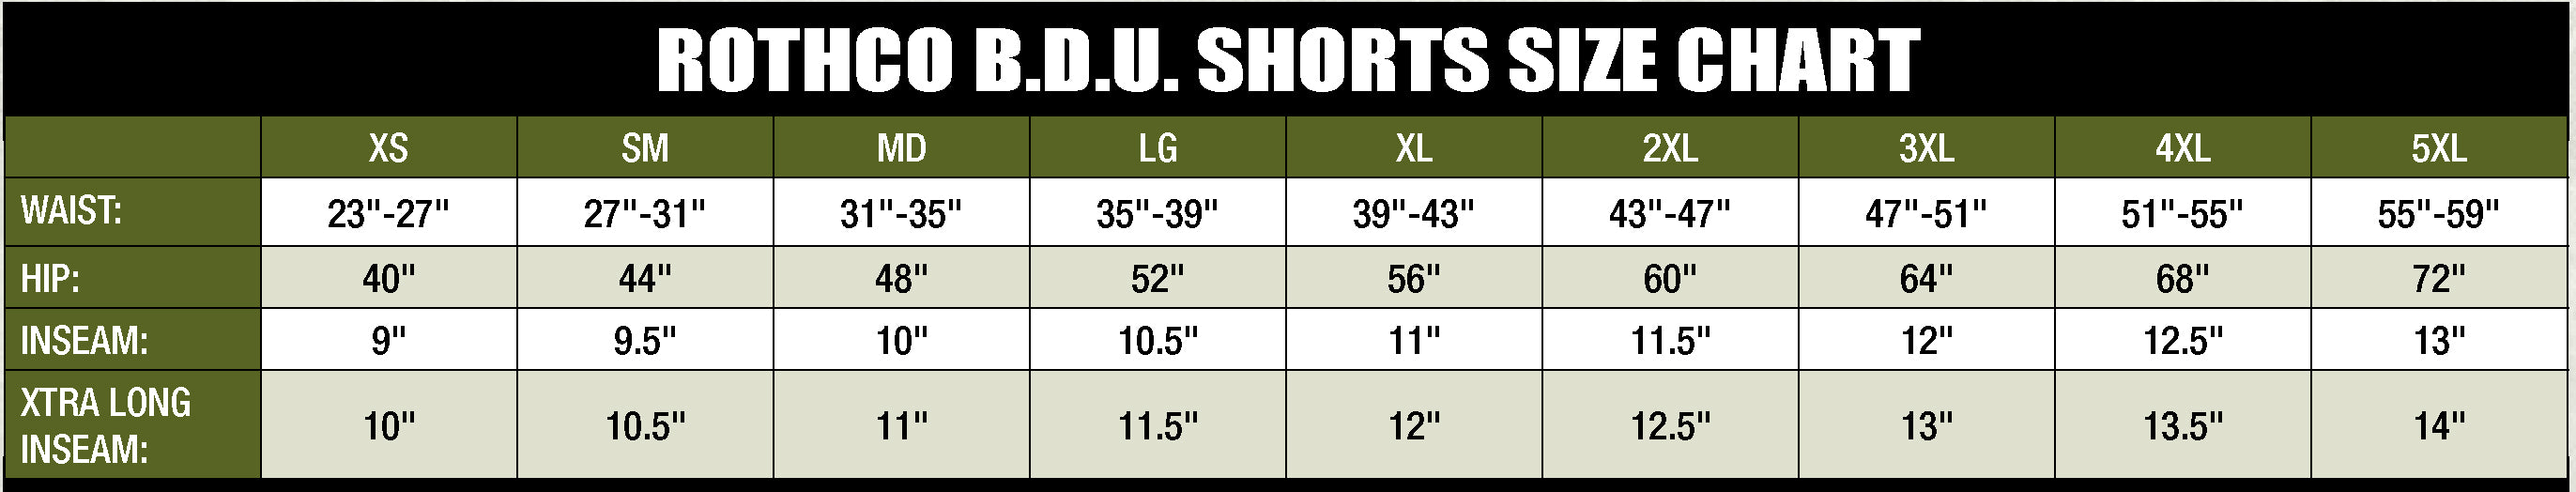 bdu short rothco size chart